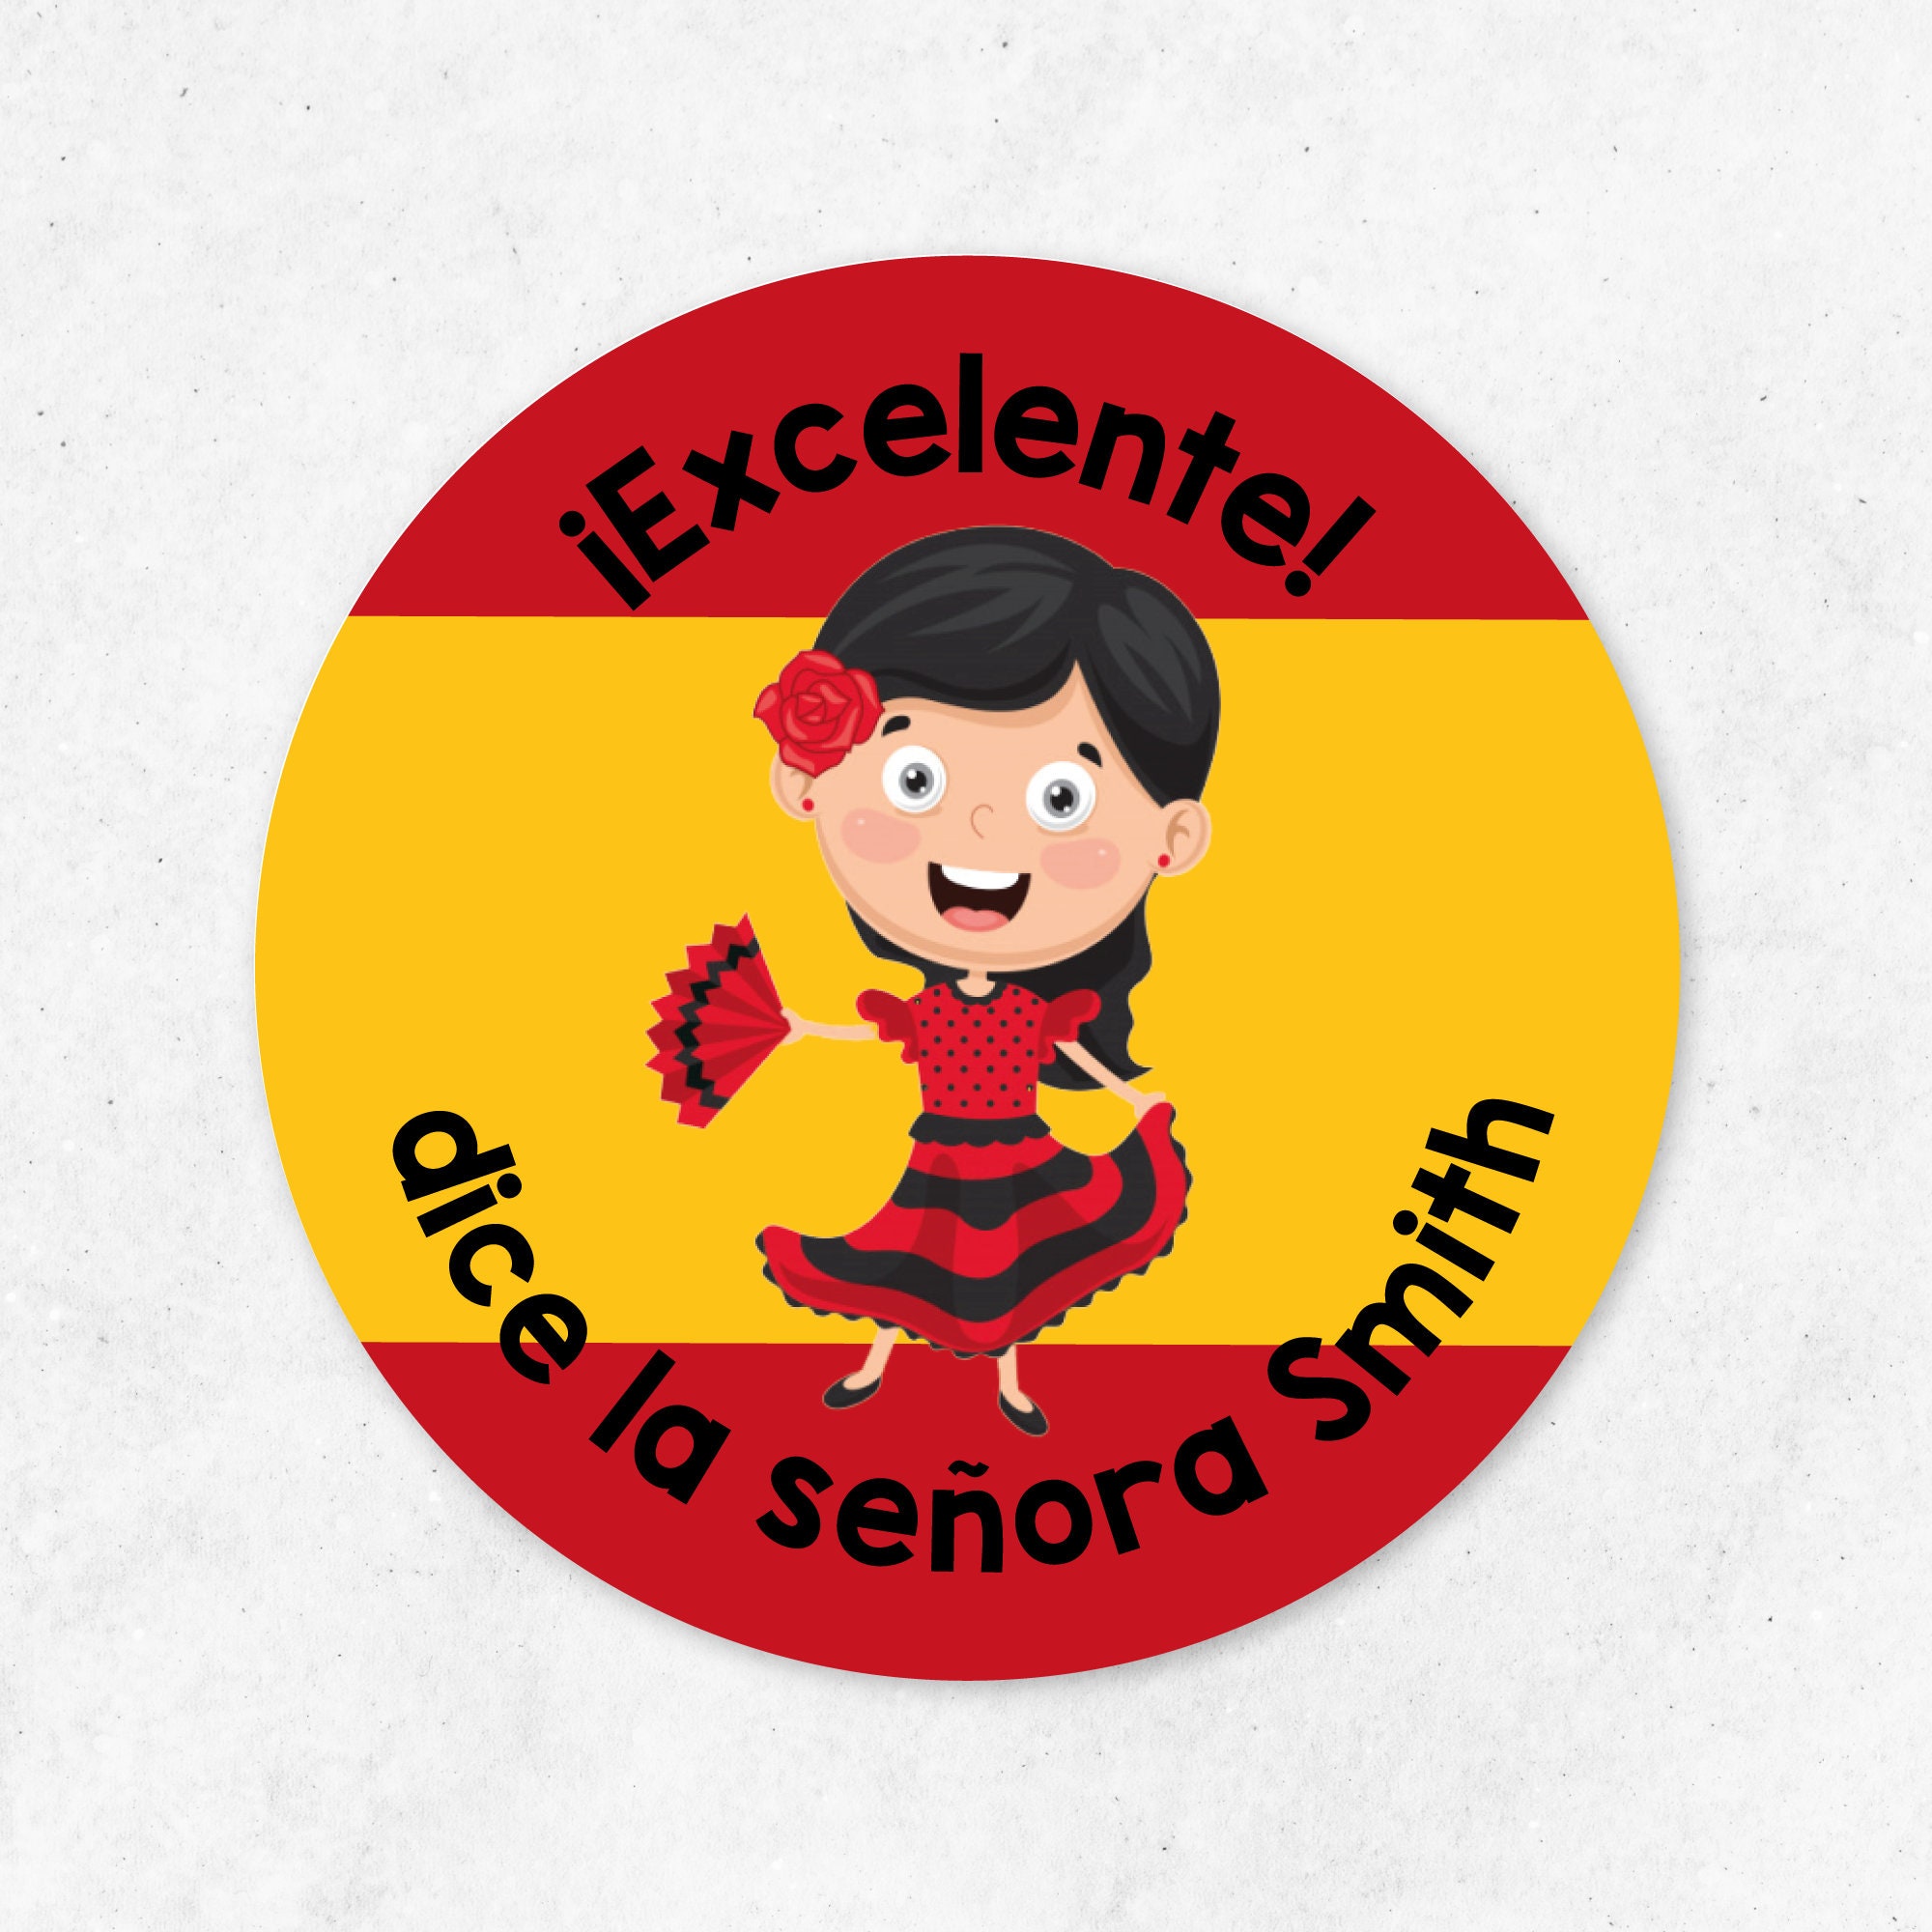 Celebra tus Logros (Spanish) Sparkle Stickers® – Large